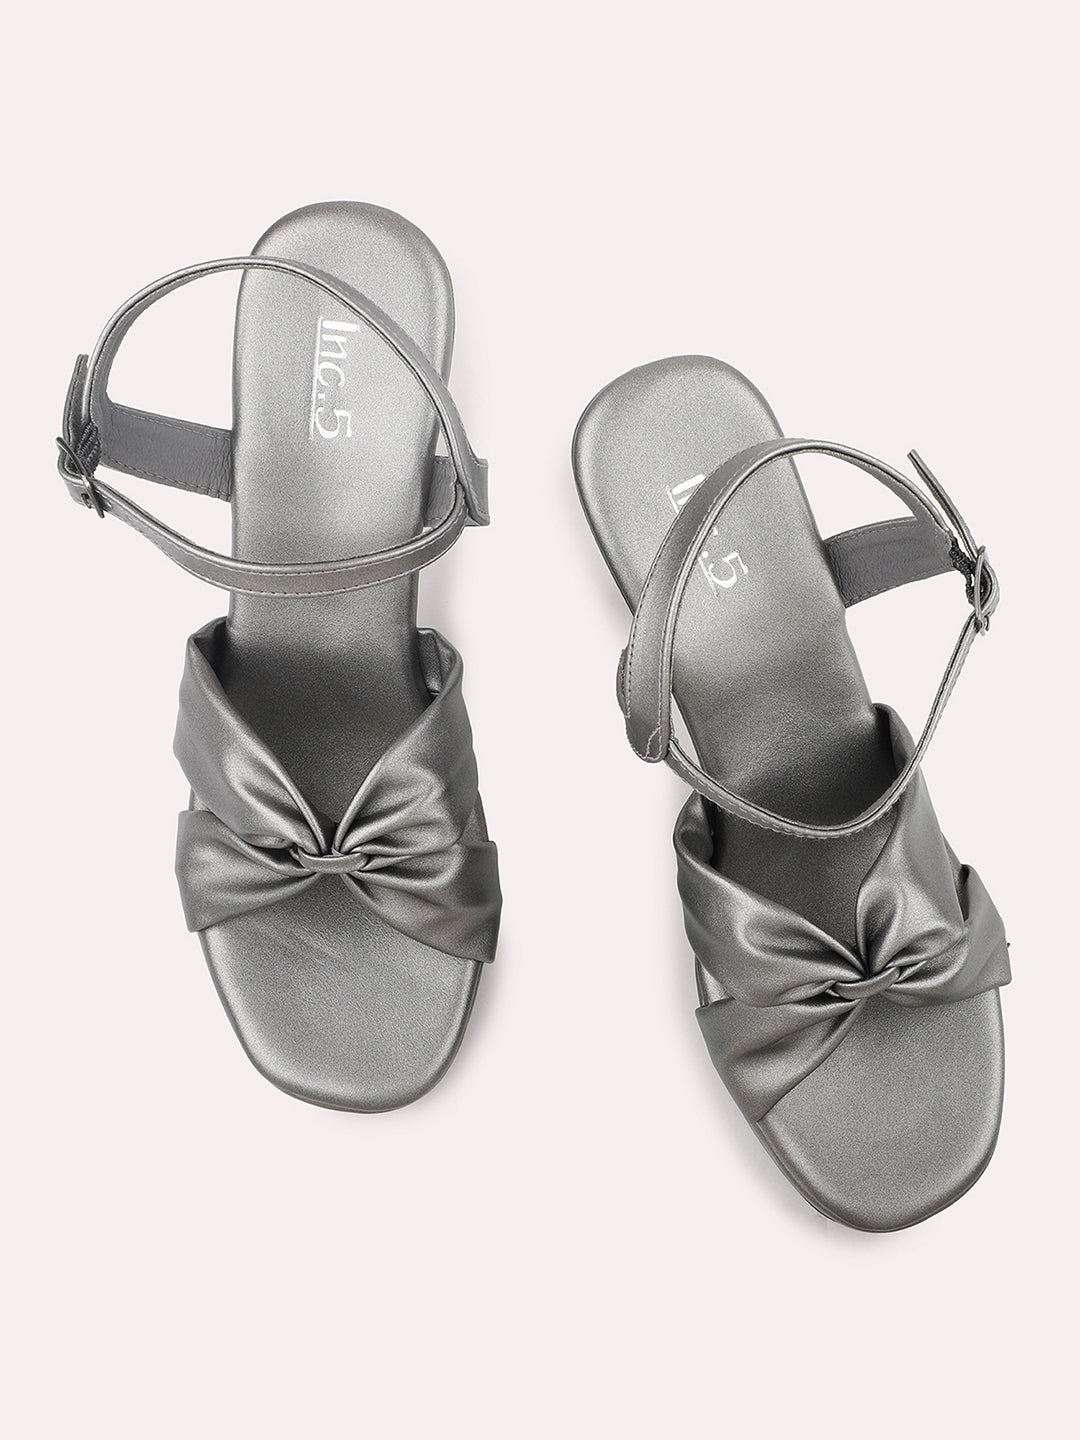 Buy Inc.5 Women Silver Transparent Shimmer Block Heels at Amazon.in